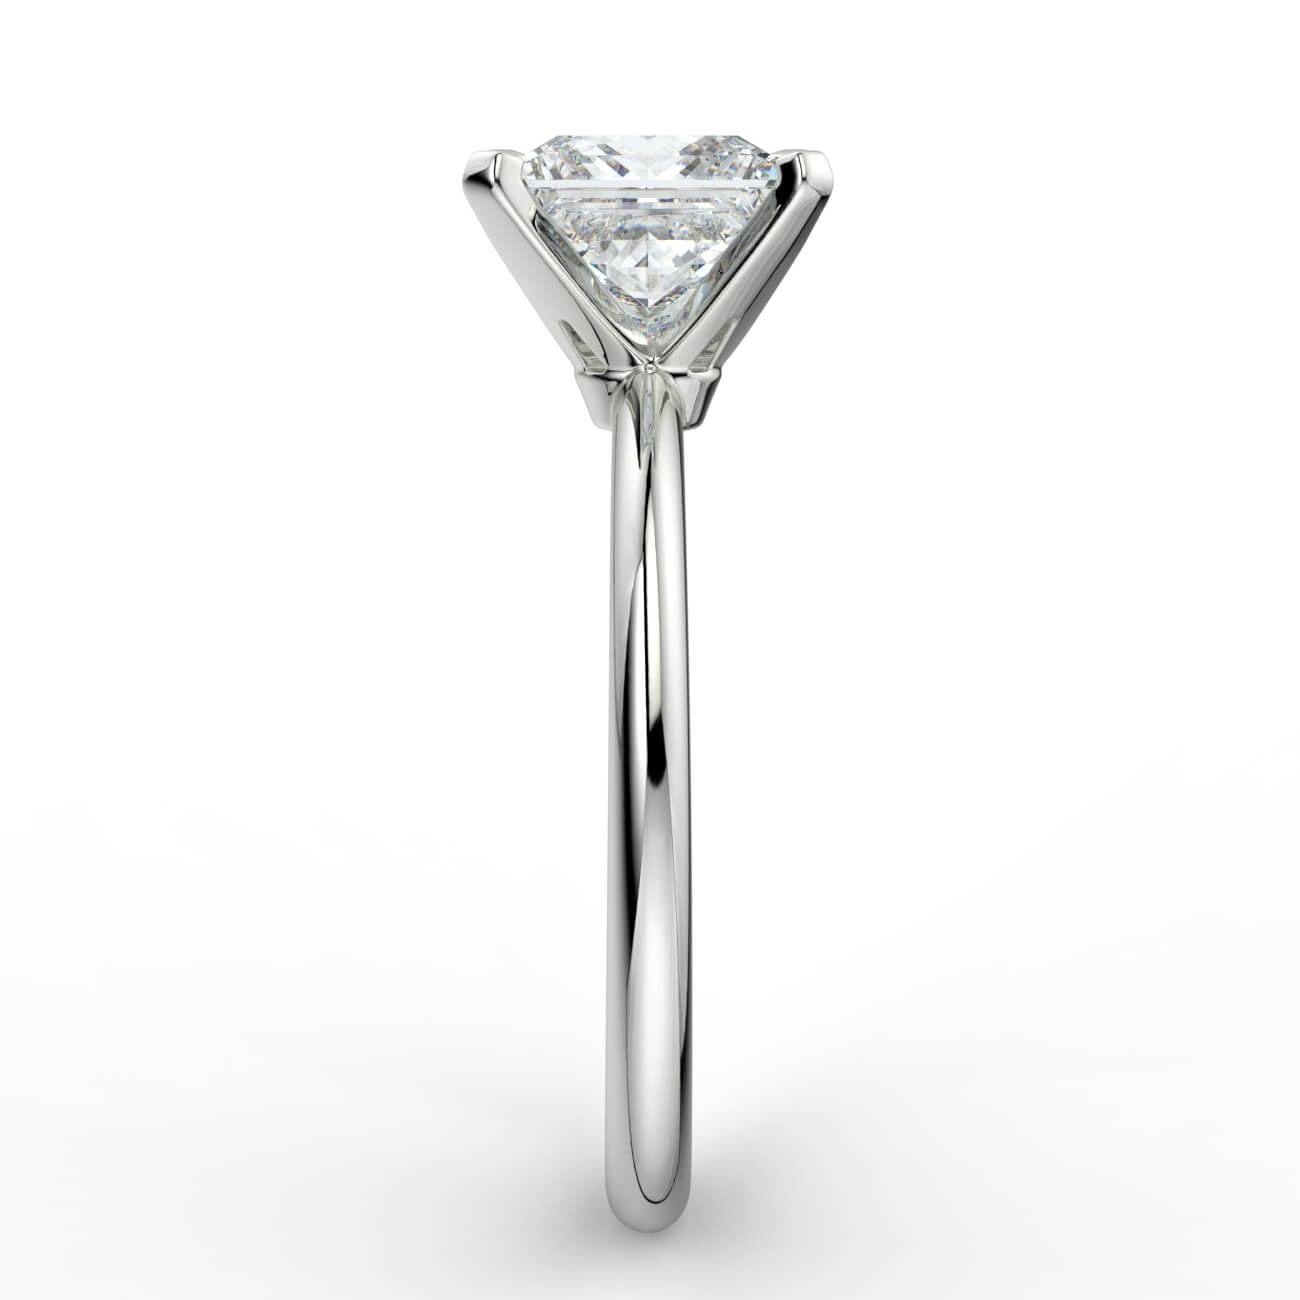 Knife-edge solitaire princess cut diamond engagement ring in white gold – Australian Diamond Network